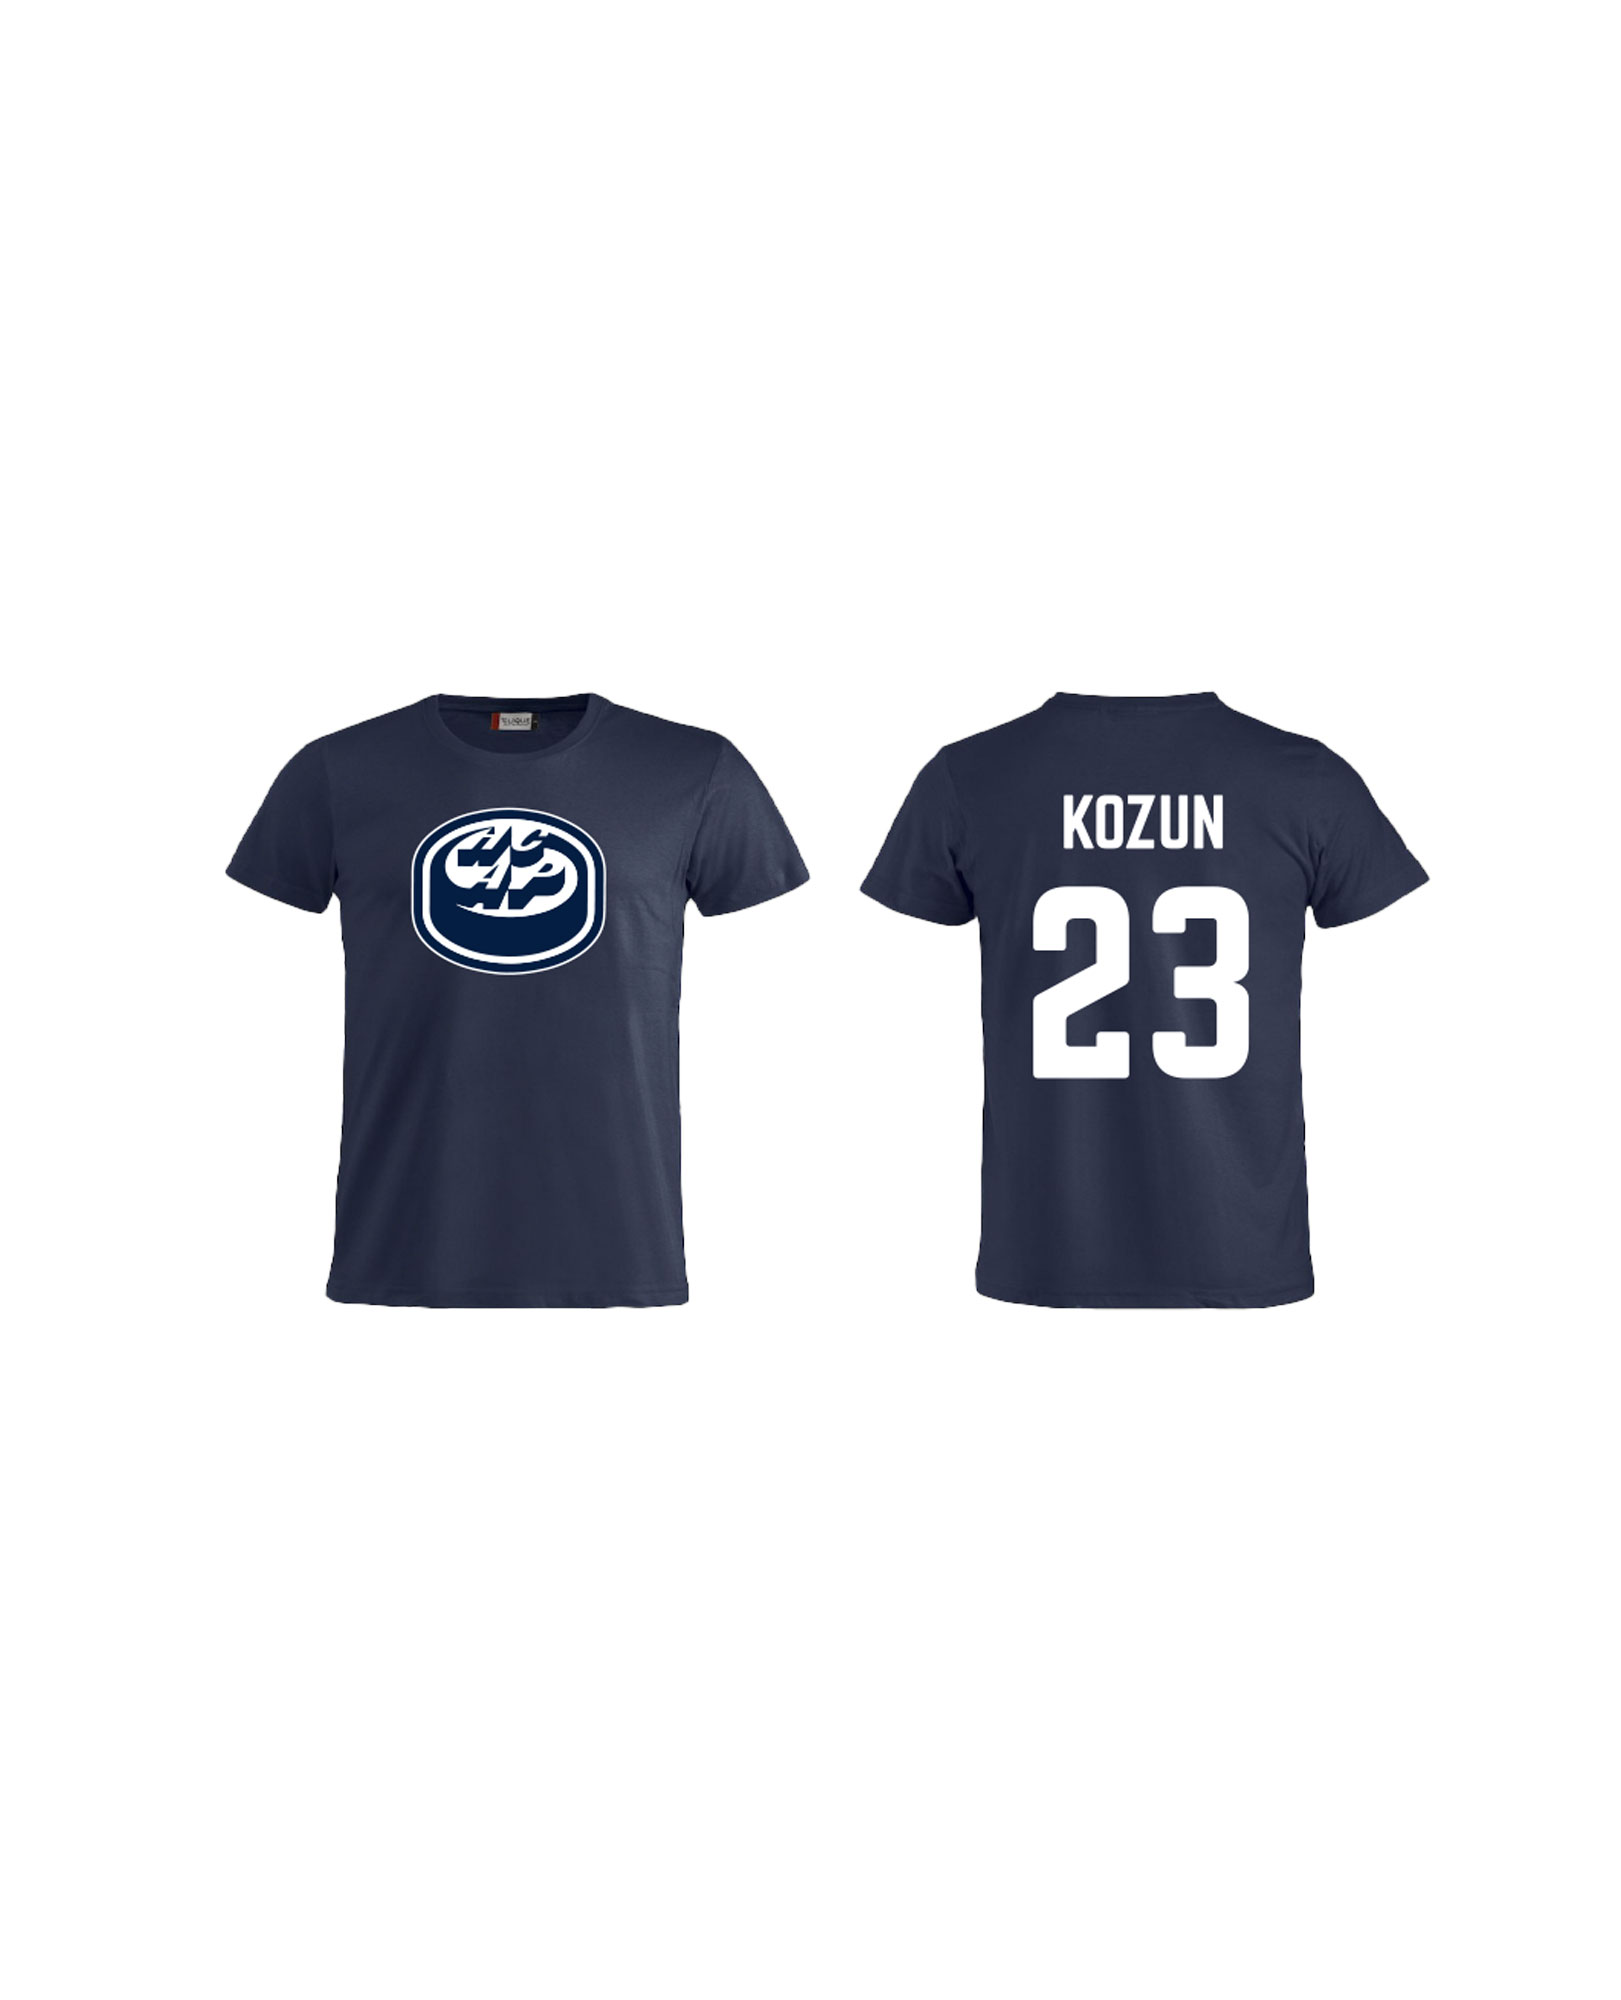 T-shirt #23 Kozun